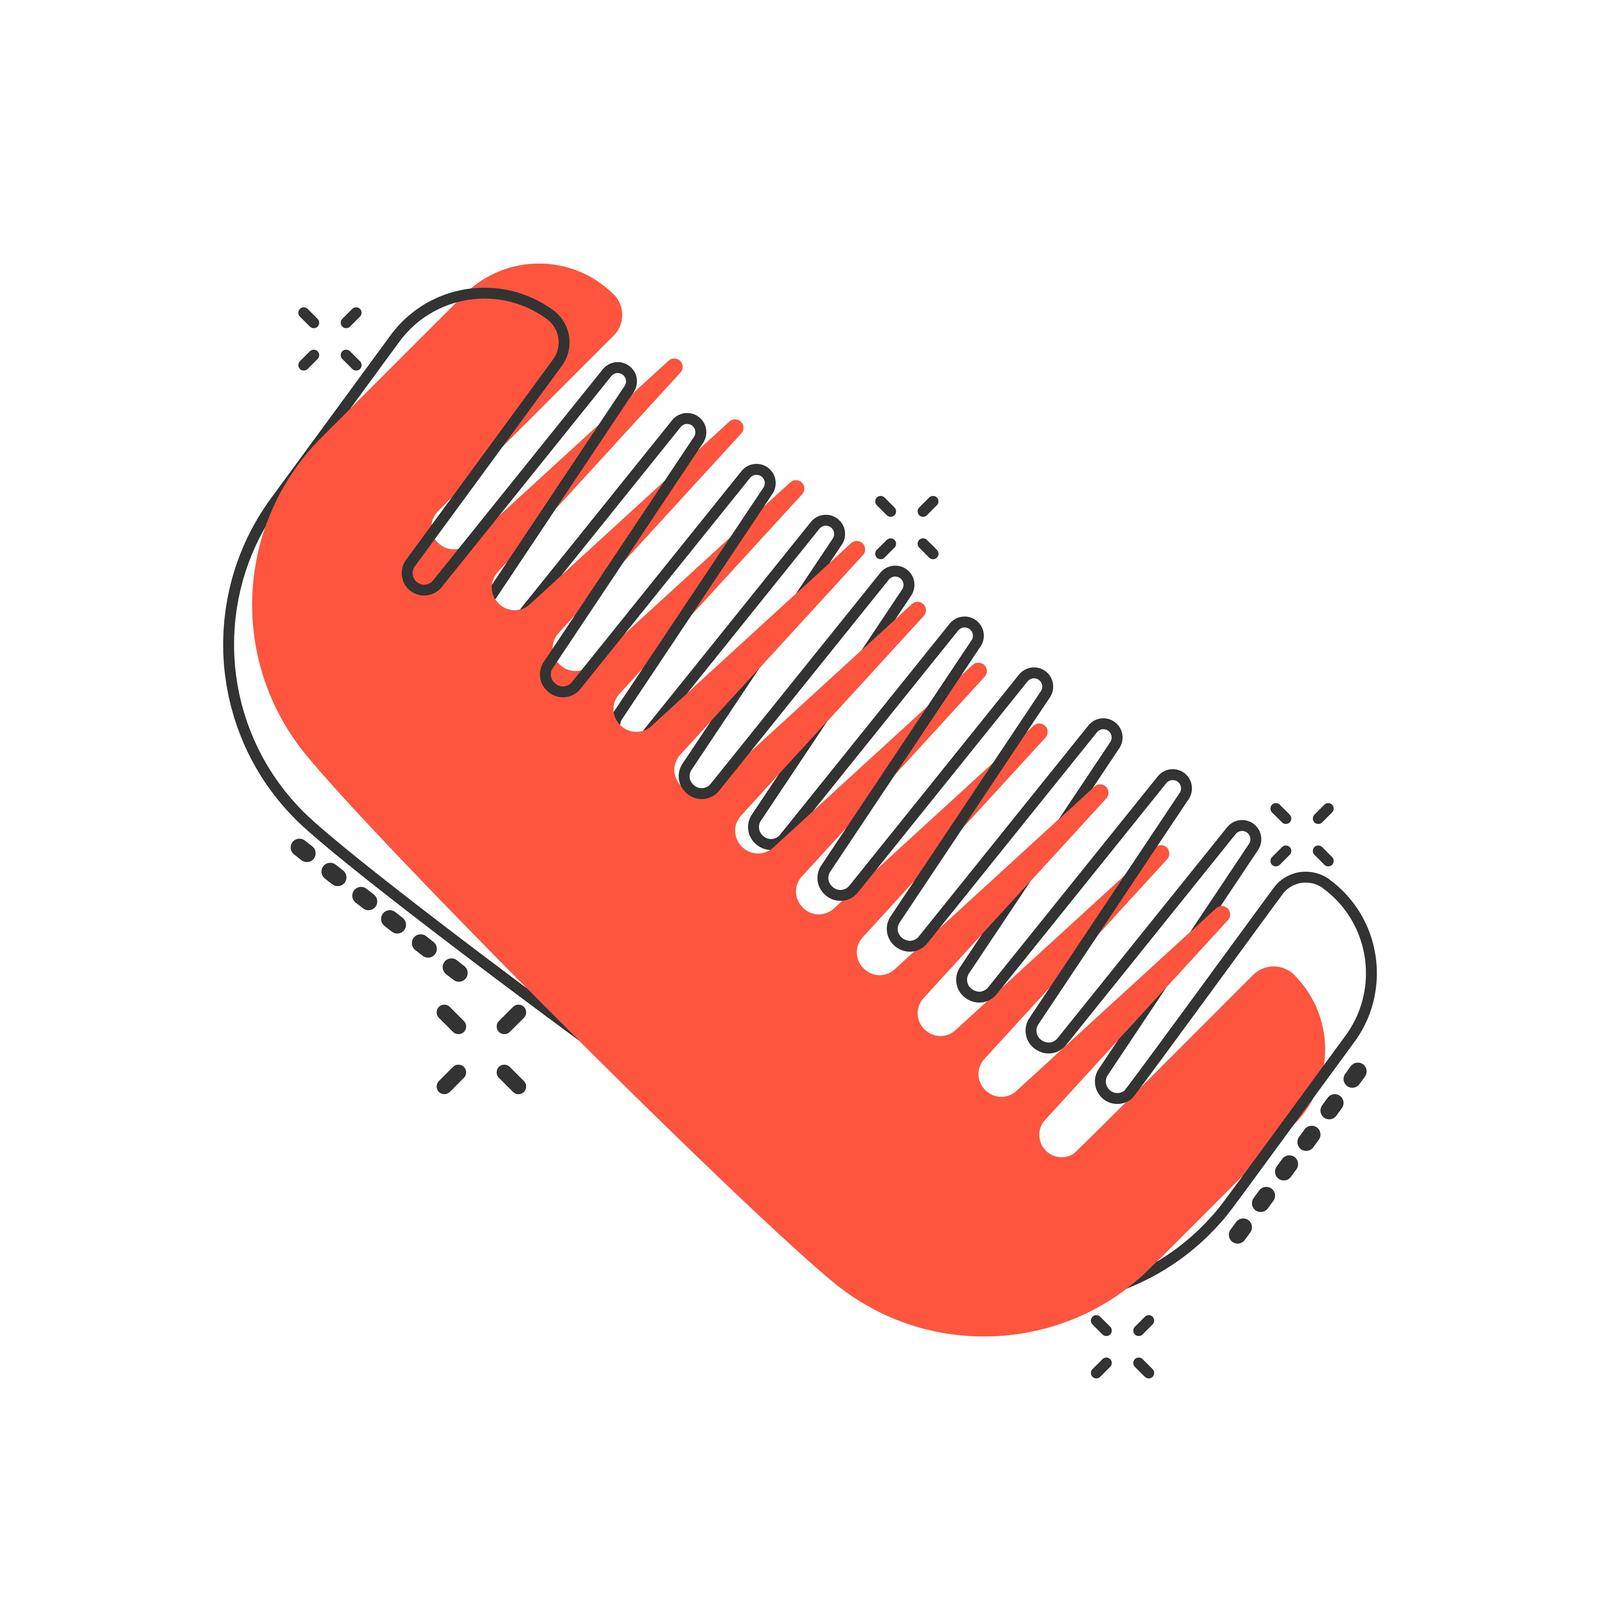 Hair brush icon in comic style. Comb accessory vector cartoon illustration pictogram splash effect. by LysenkoA